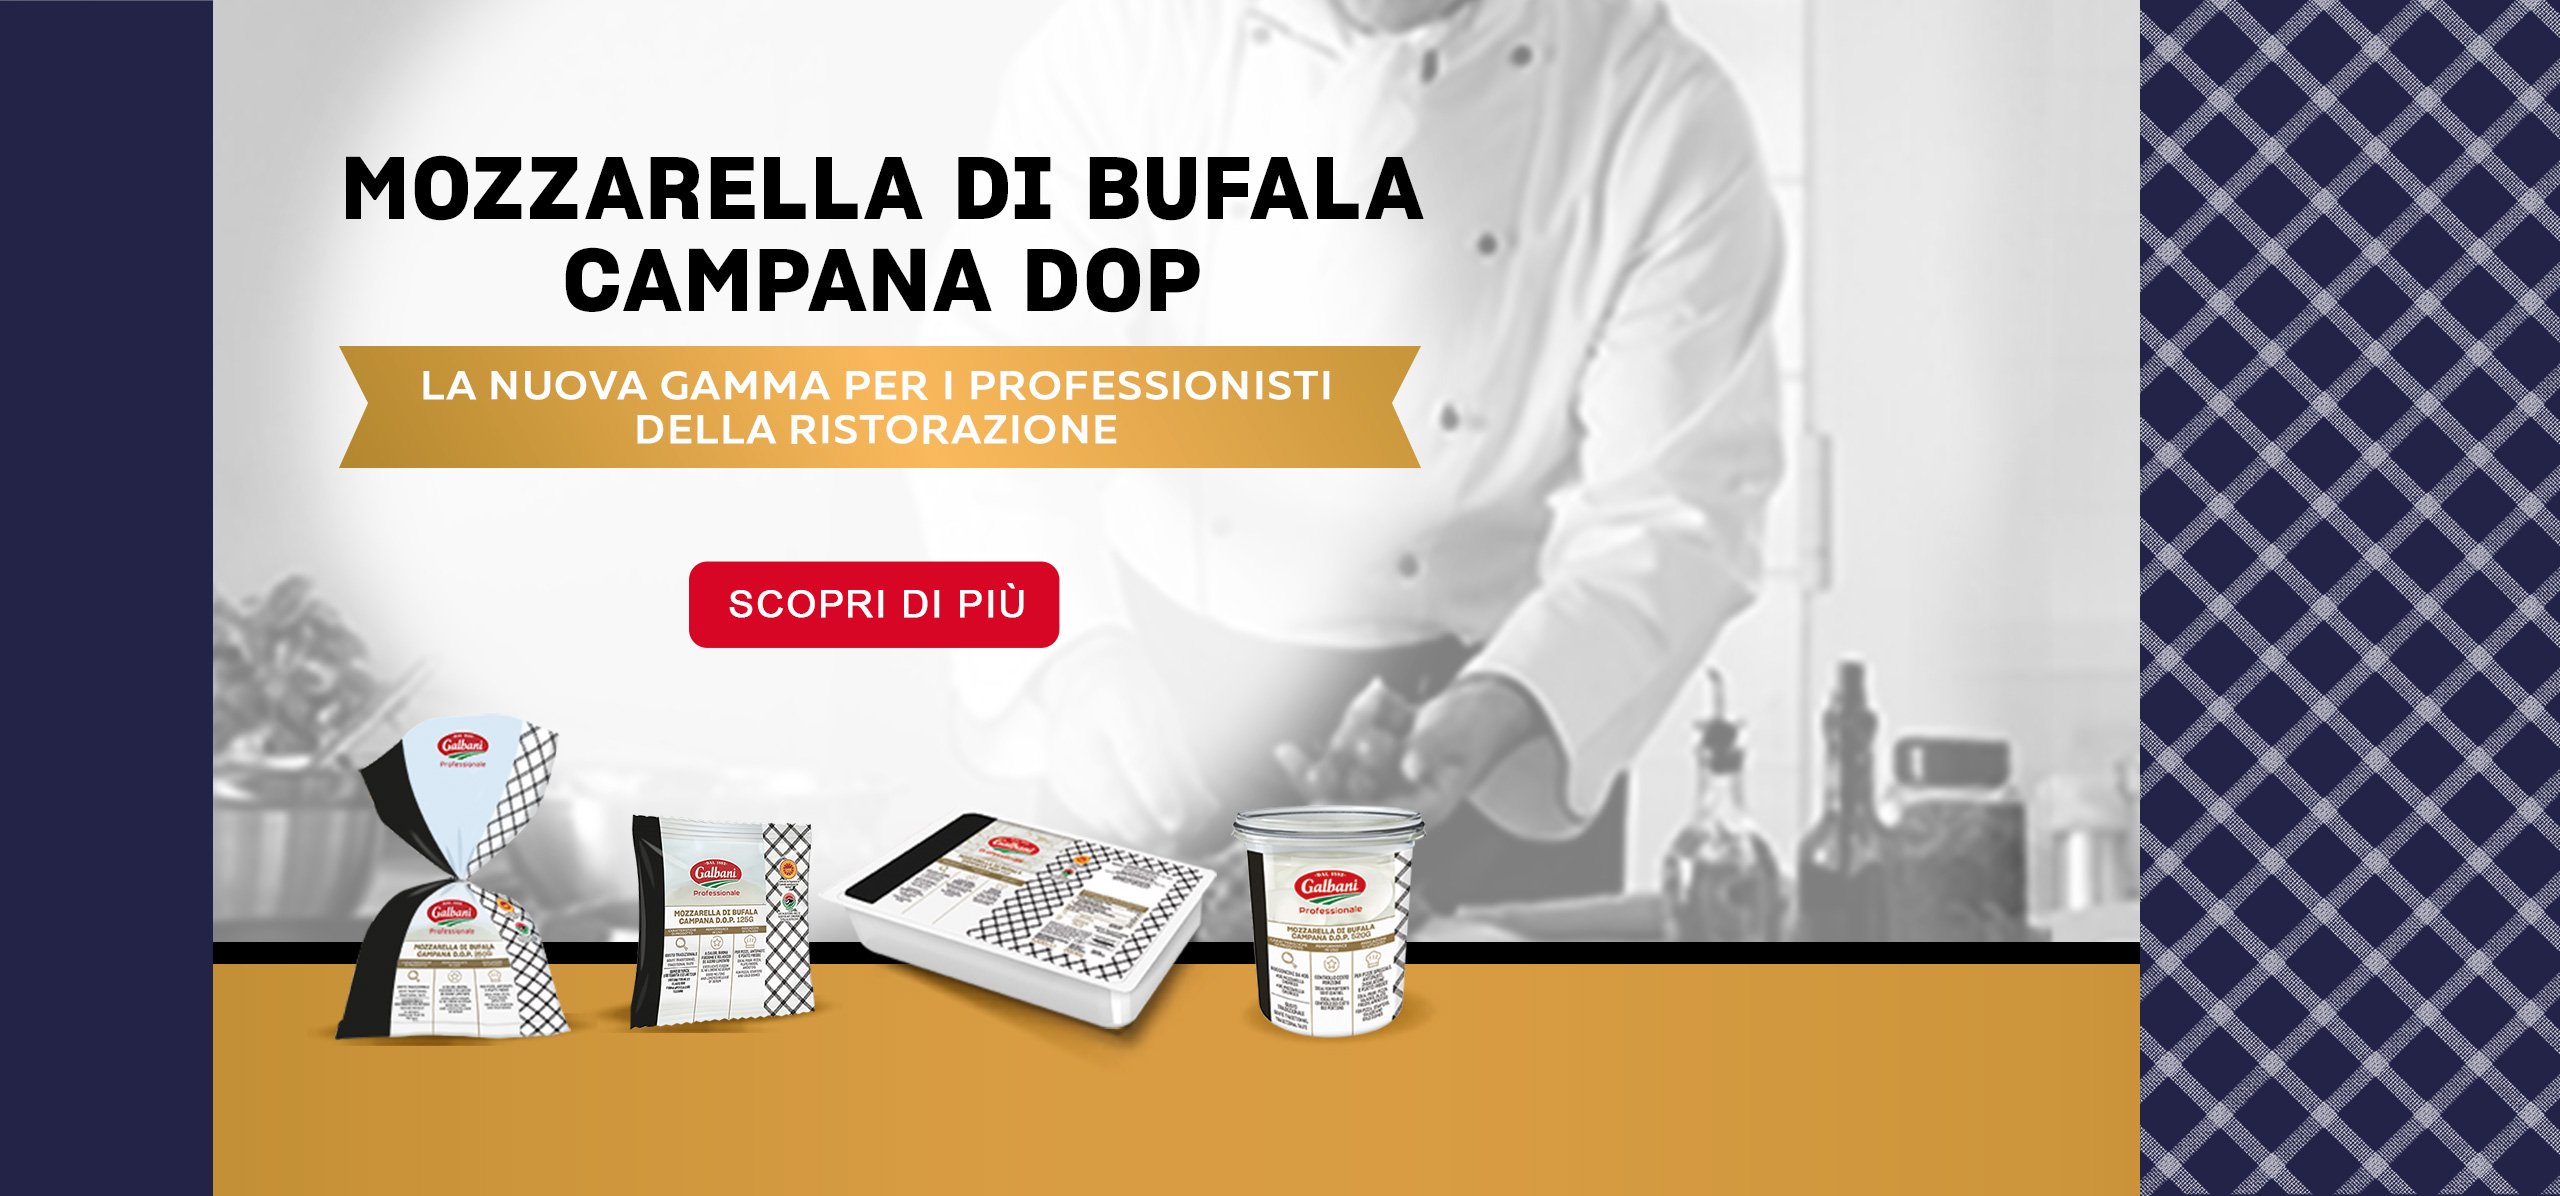 La-mozzarella-di-bufala-campana-dop2560X1196